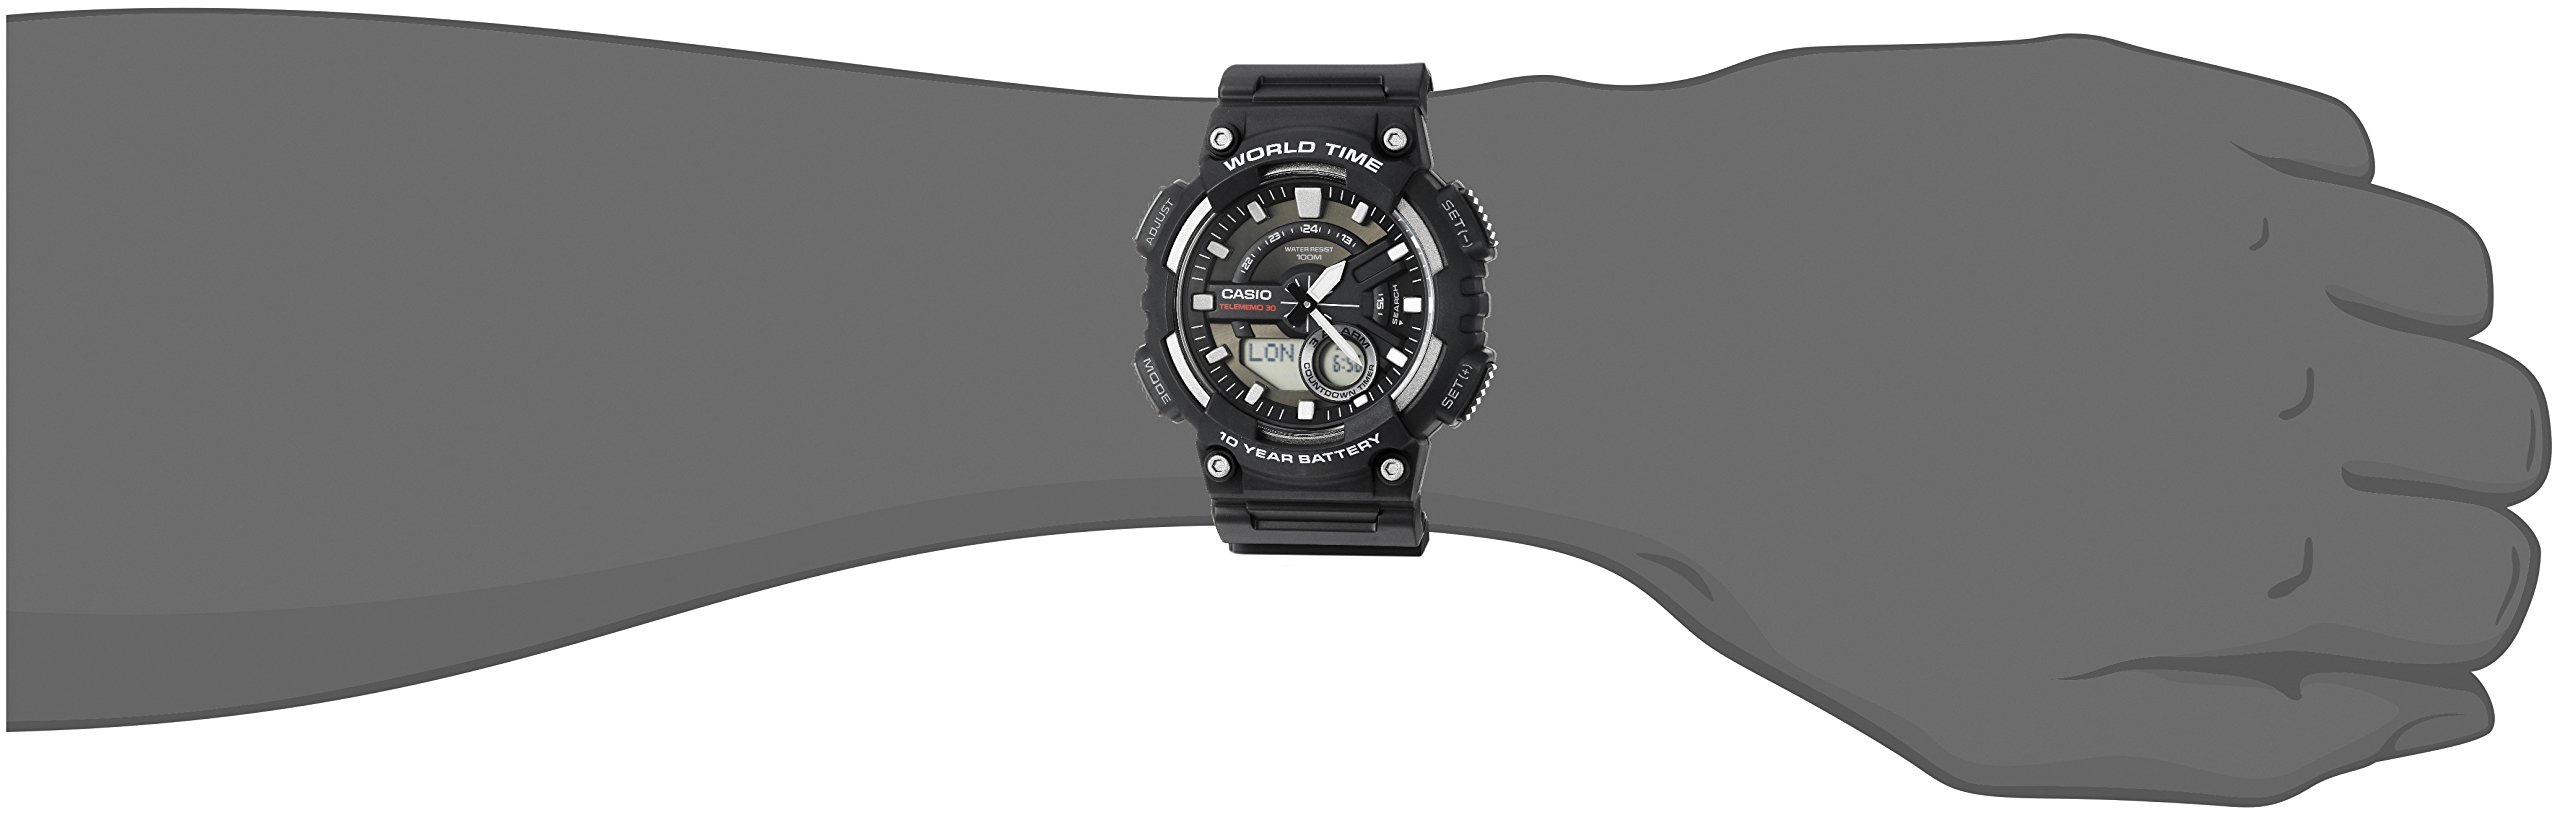 Casio Men's AEQ110W-1AV Analog and Digital Quartz Black Watch